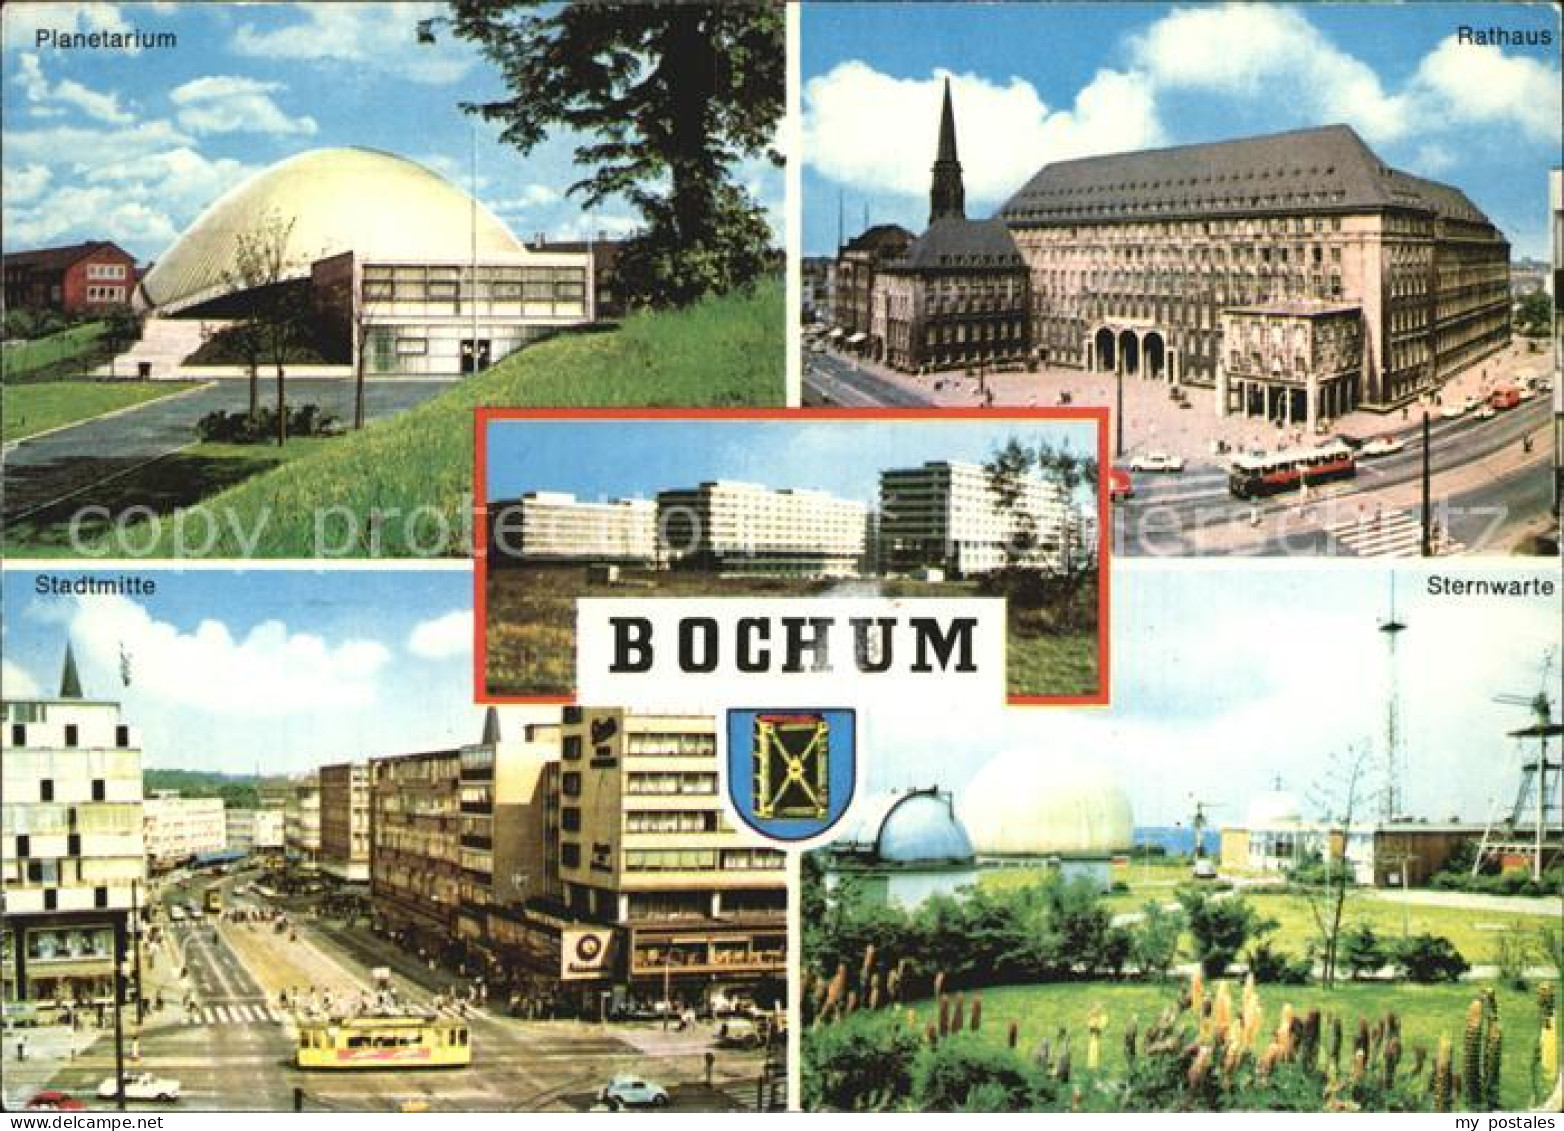 72519884 Bochum Planetarium Rathaus Stadtmitte Sternwarte Bochum - Bochum